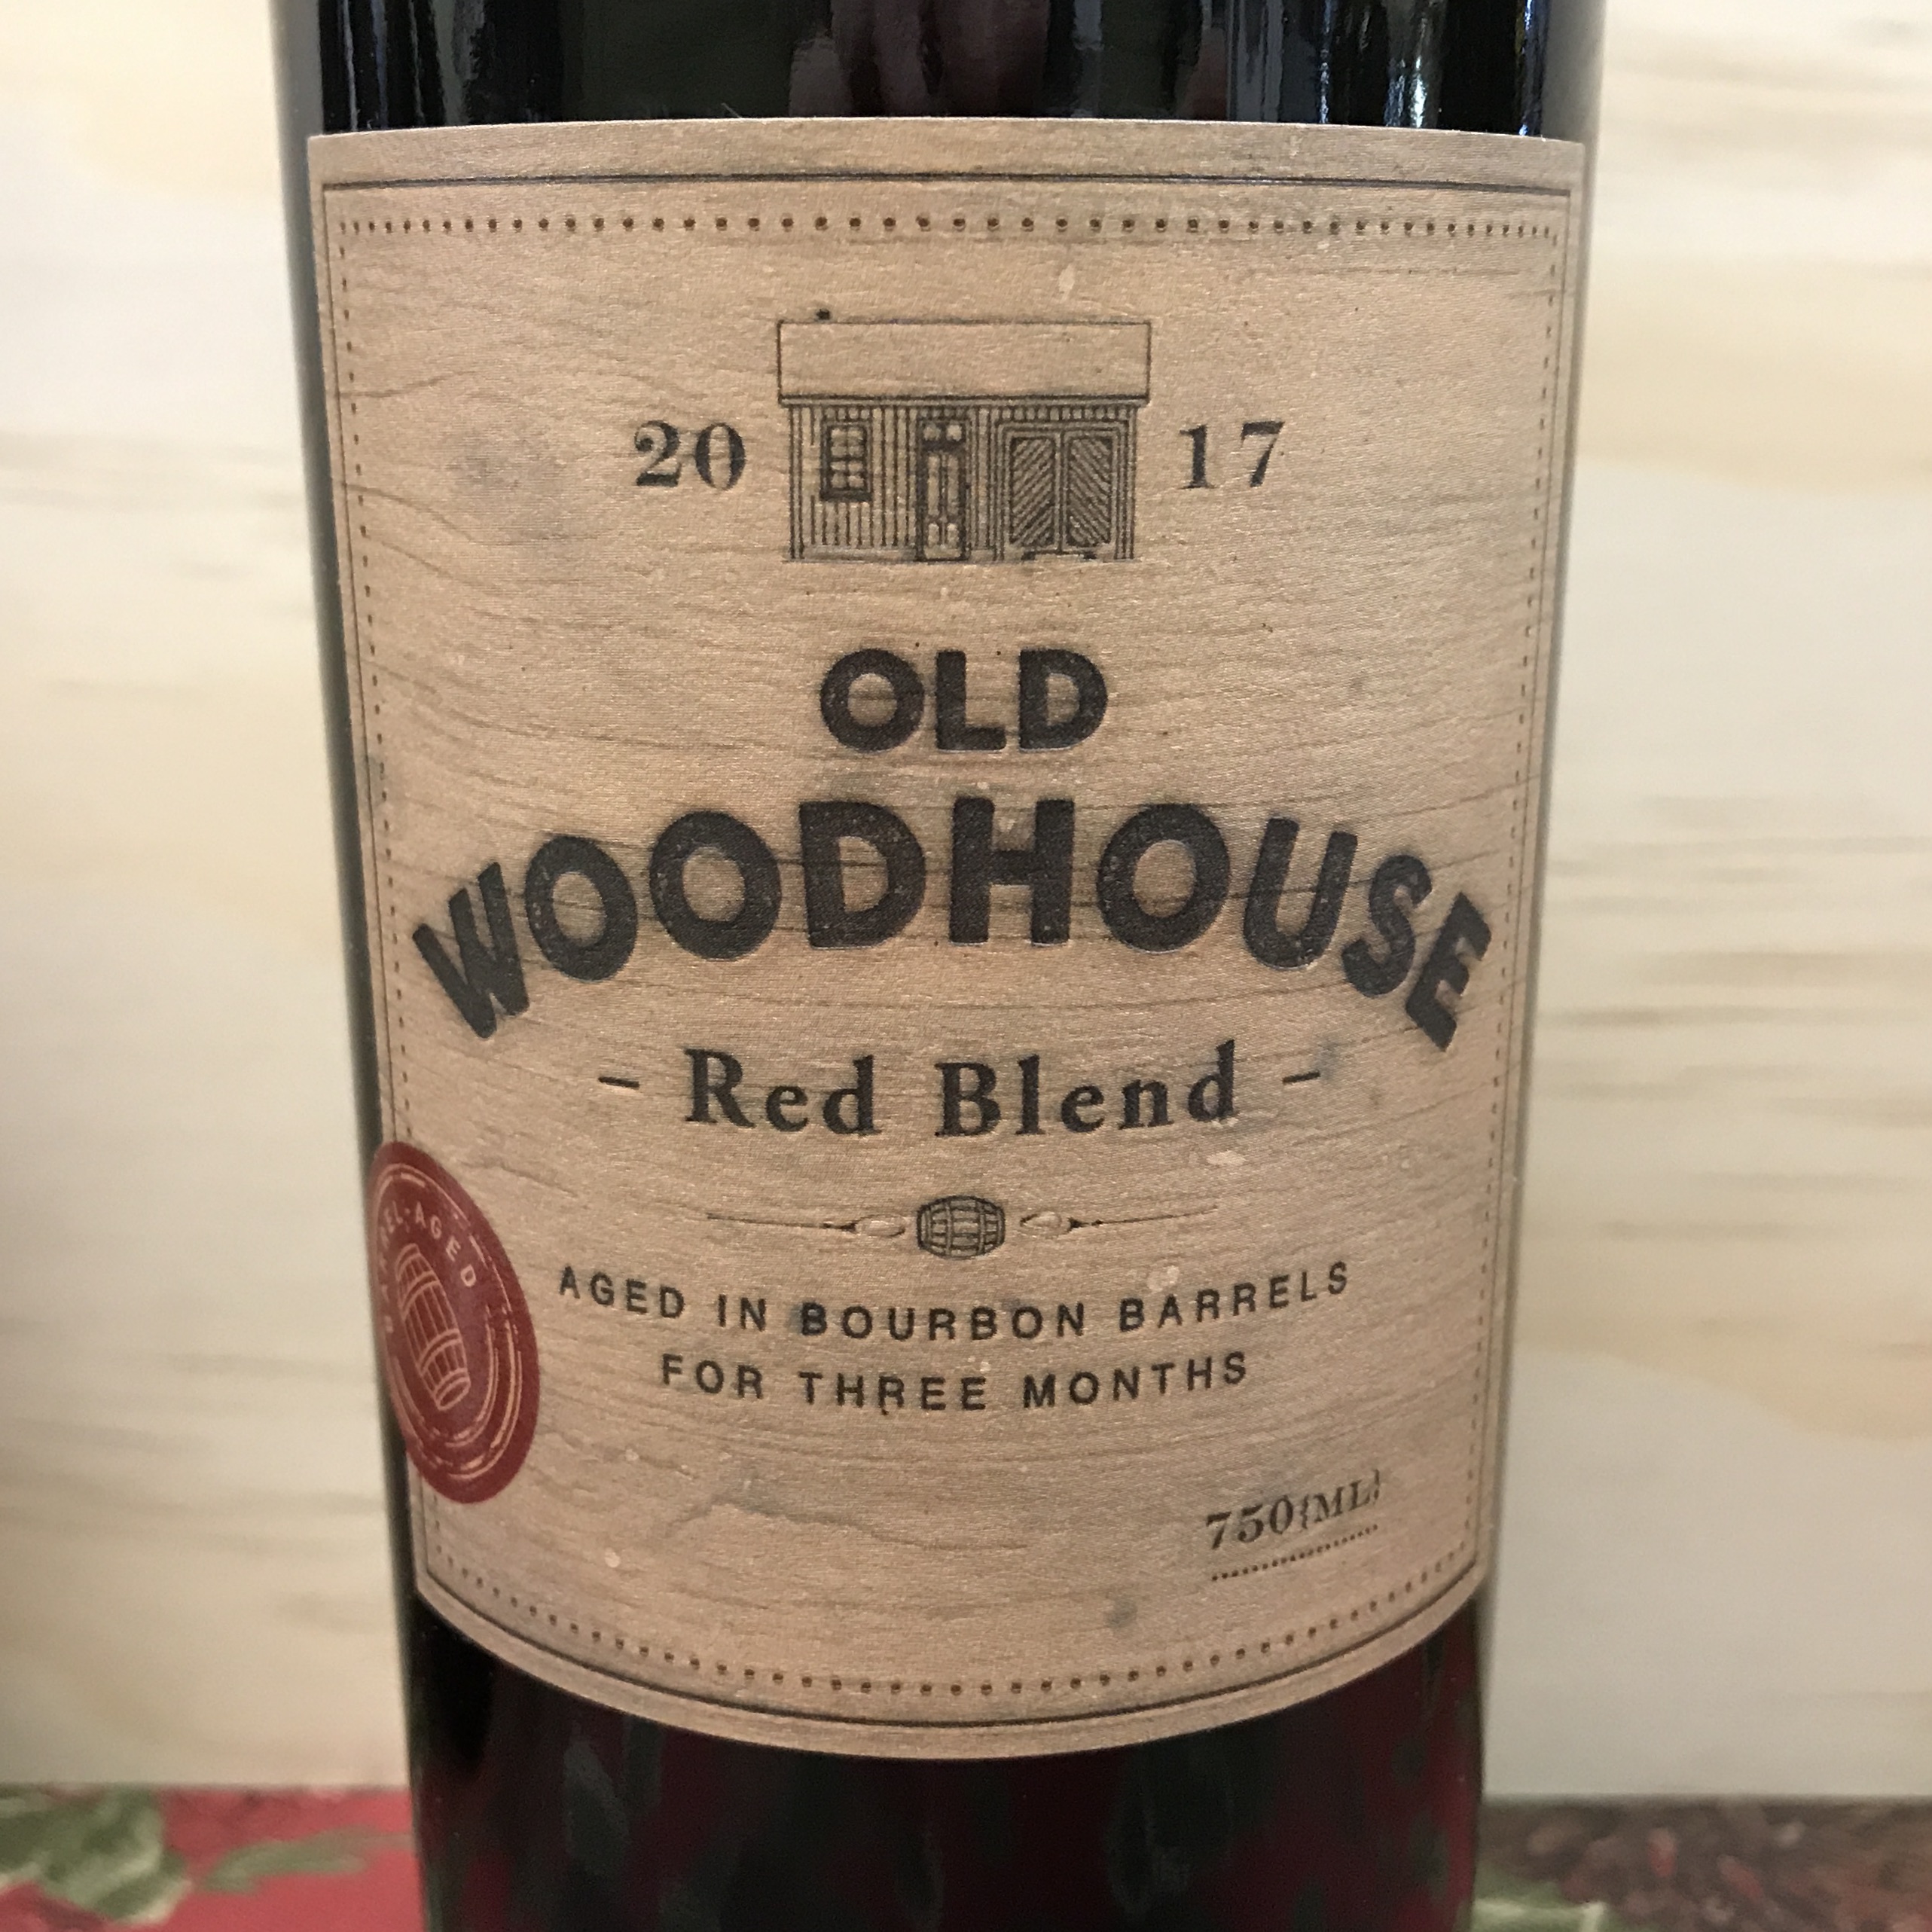 Old Woodhouse Red Blend Bourbon Barrel Aged 2019